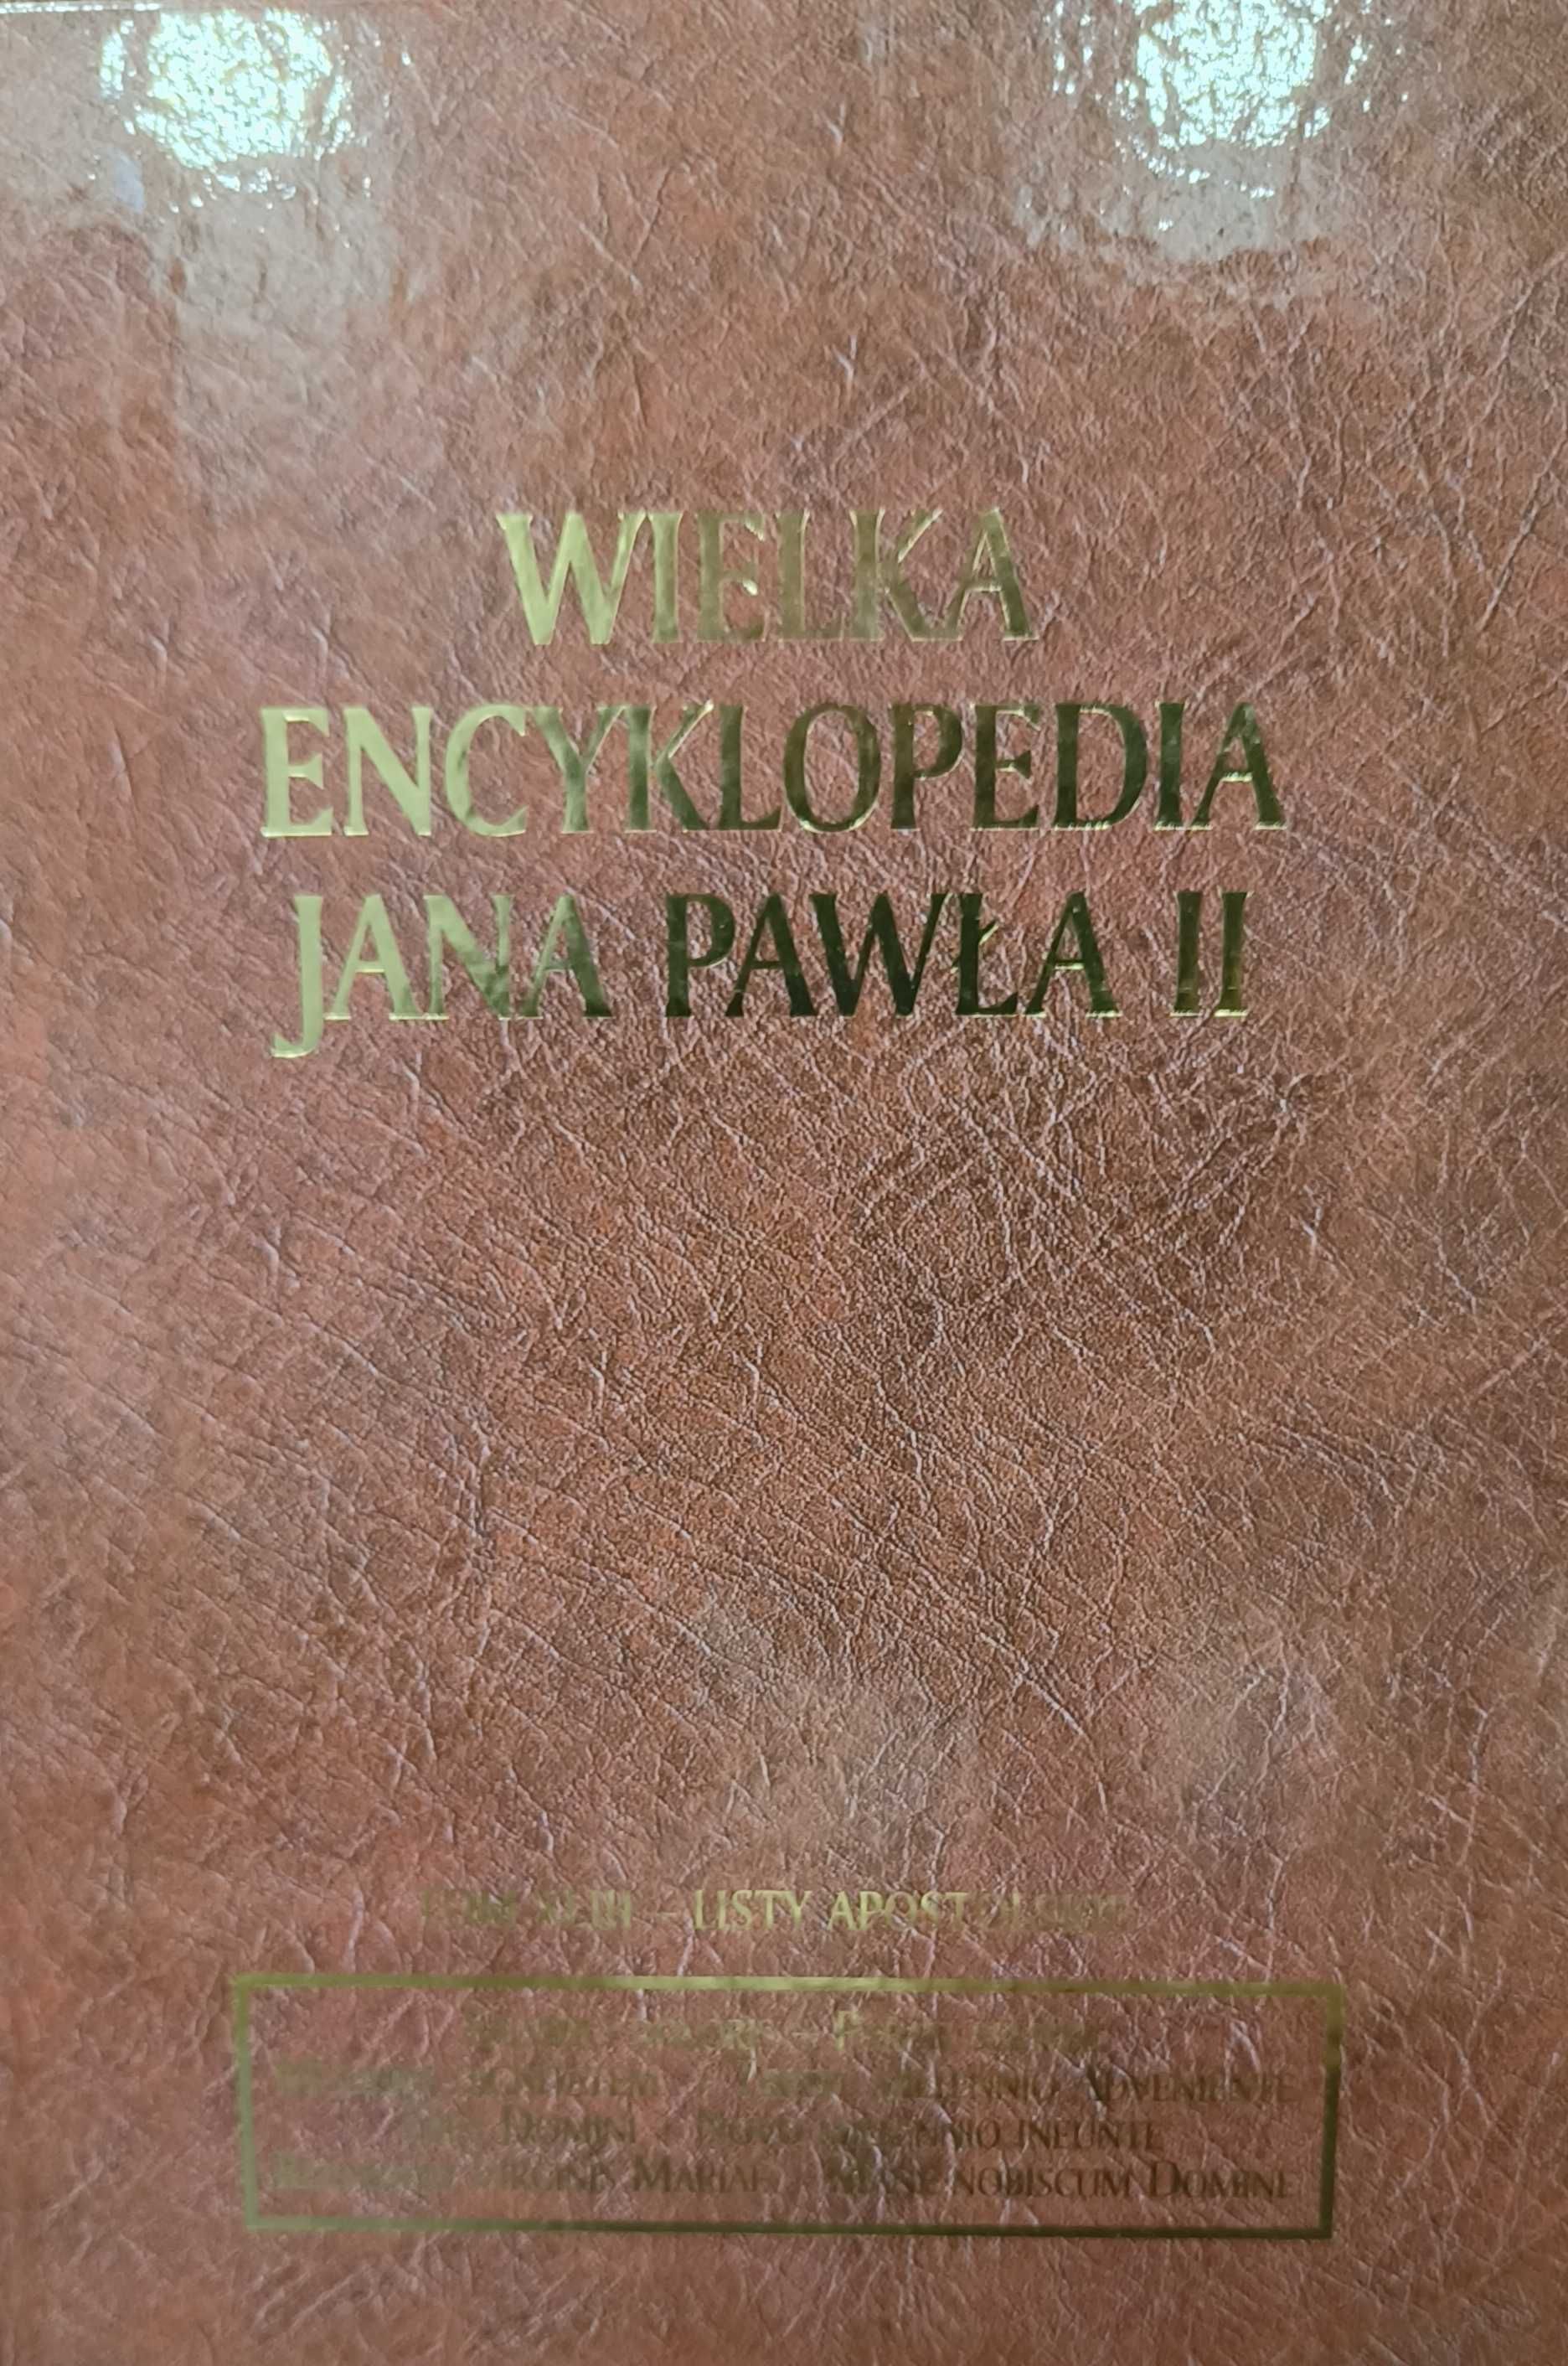 Wielka Encyklopedia Jana Pawła II 67 tomów + testament i dvd (komplet)